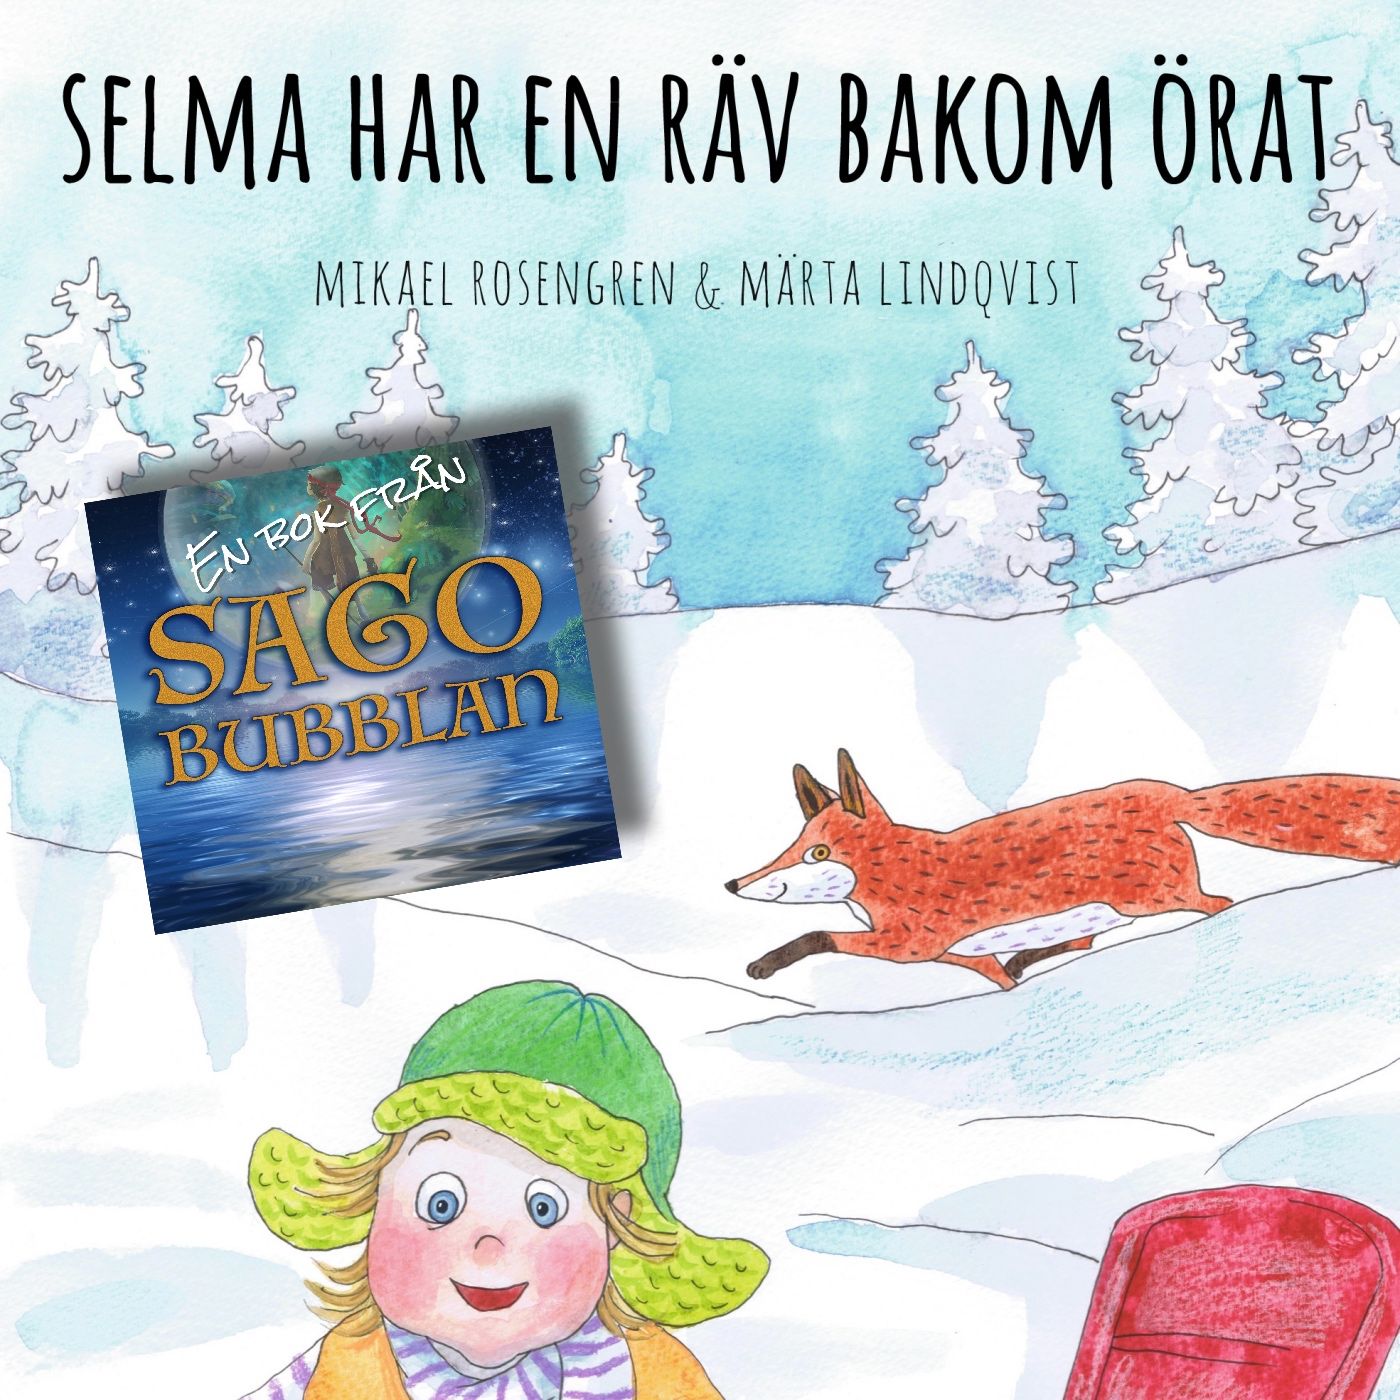 Selma har en räv bakom örat, audiobook by Mikael Rosengren